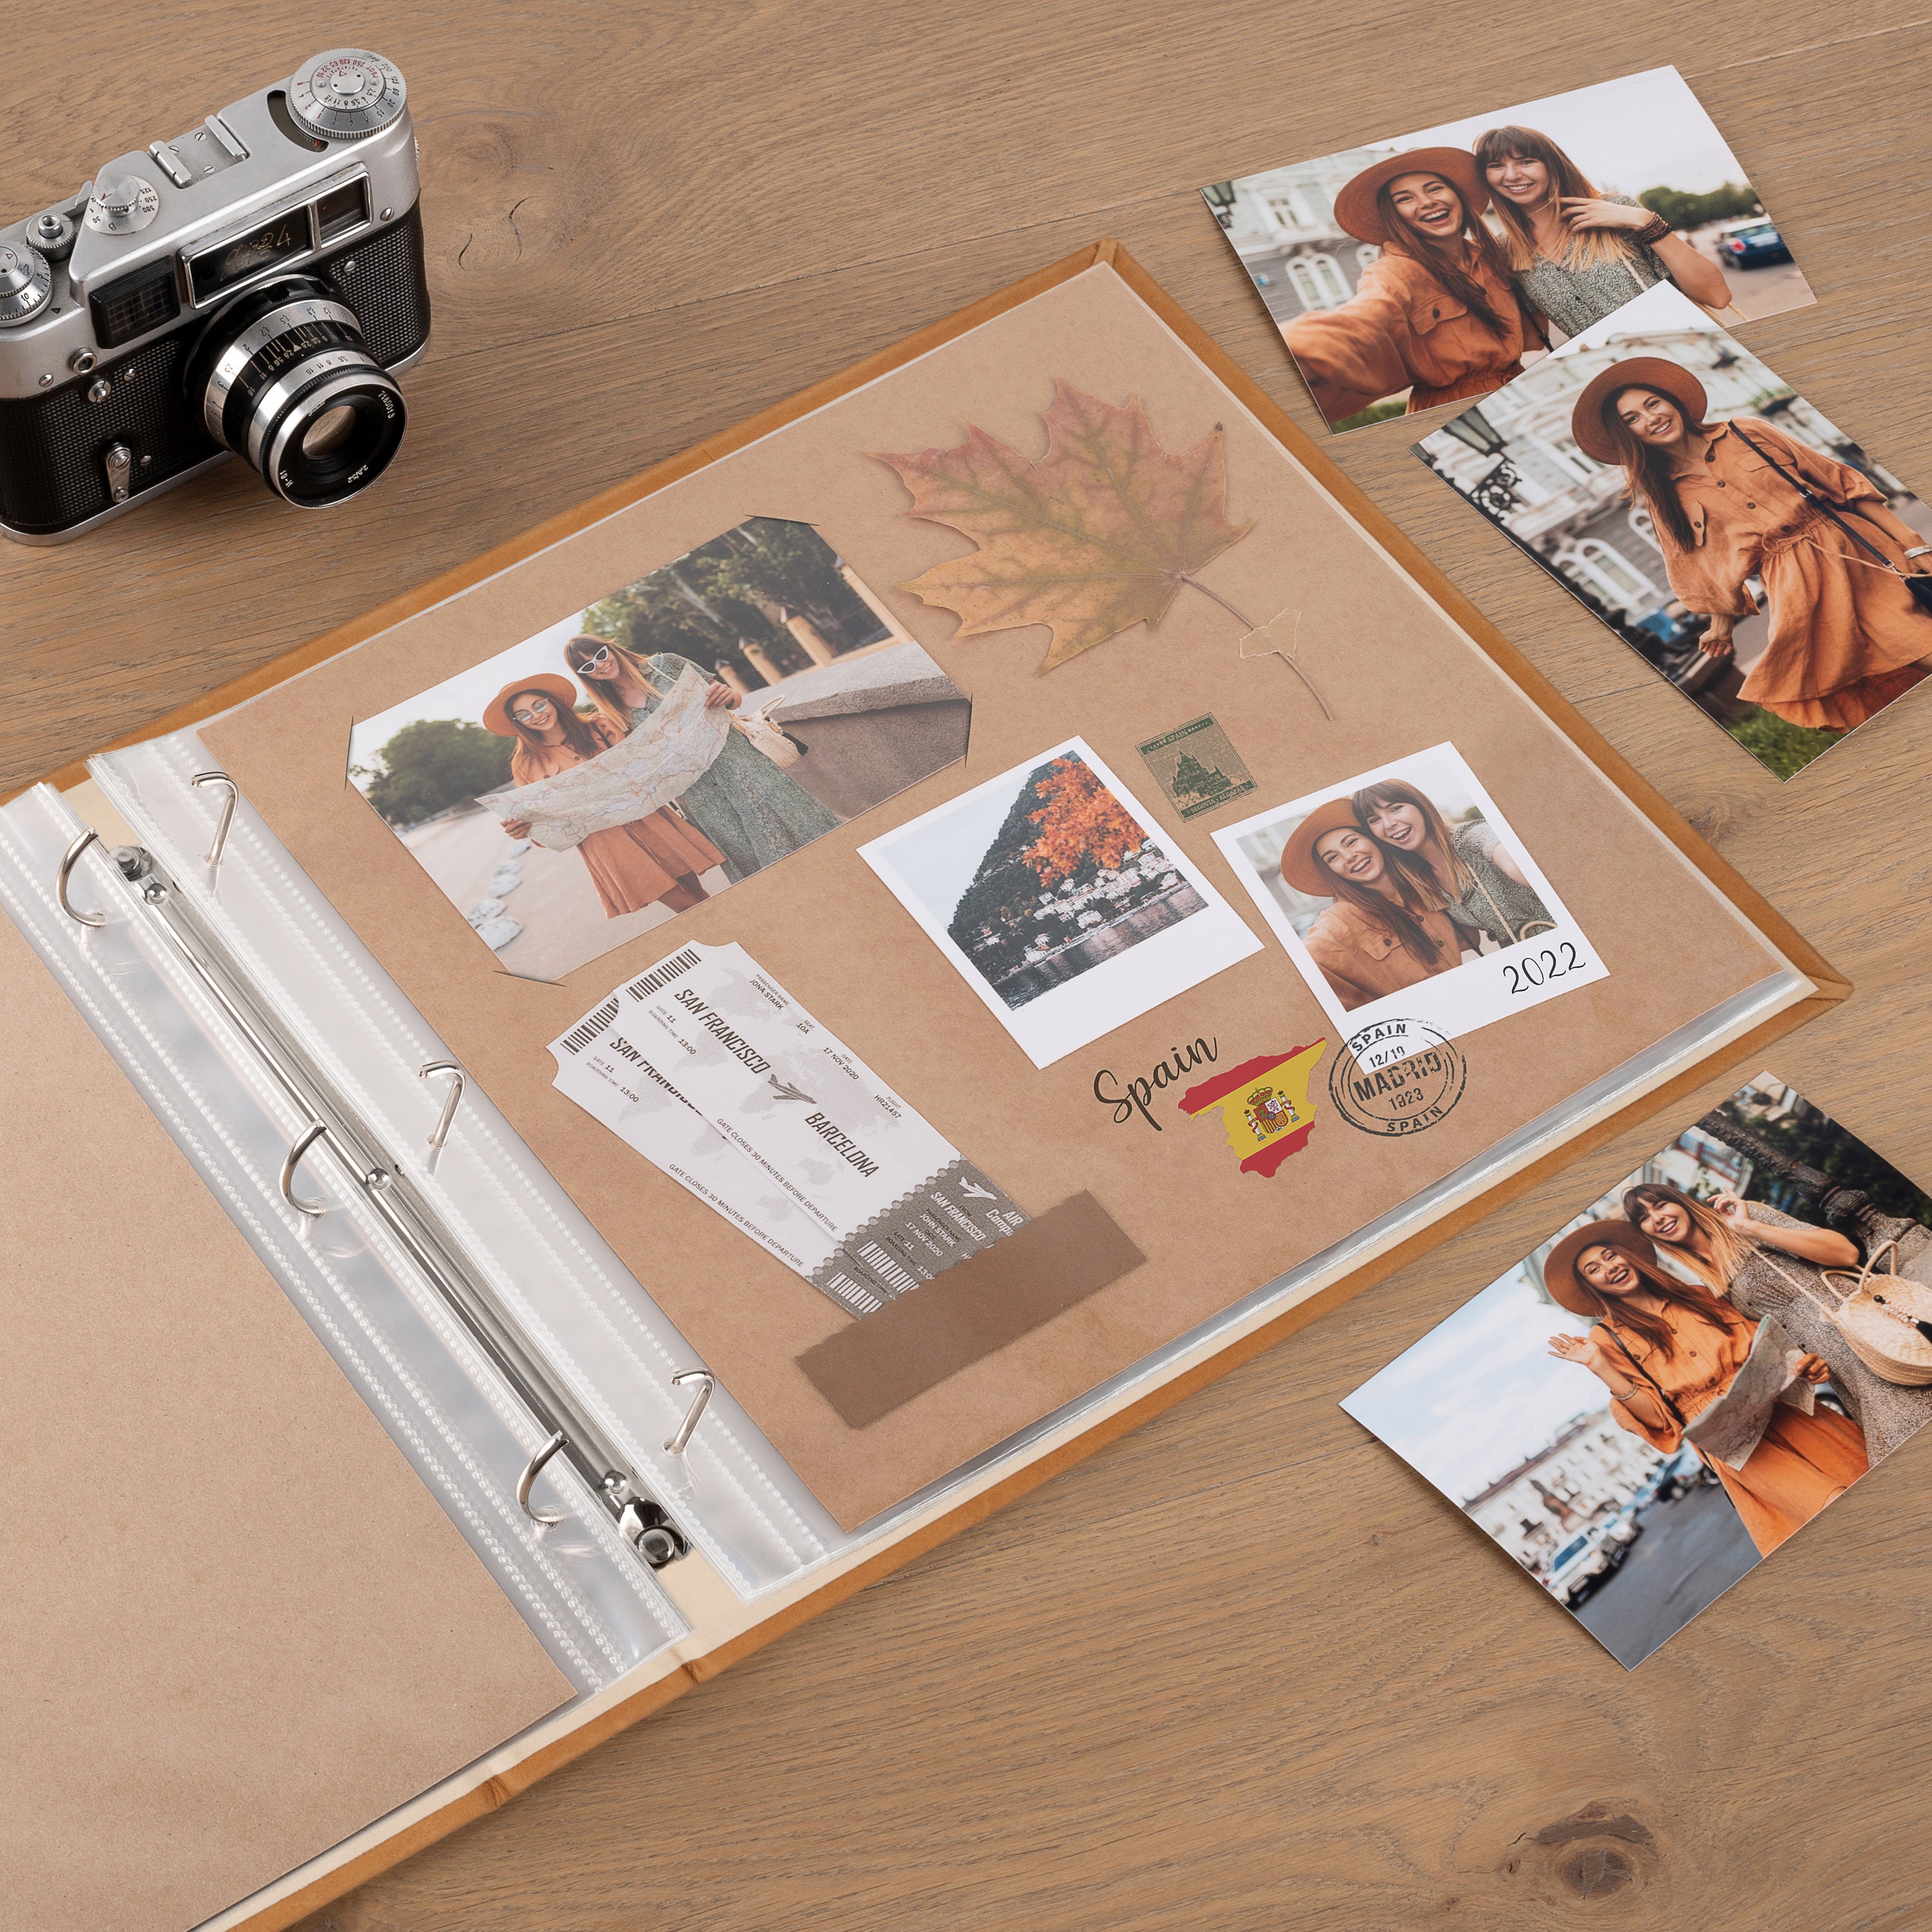 12x12 Leather Scrapbook Album, Rustic Personalized Family Photo